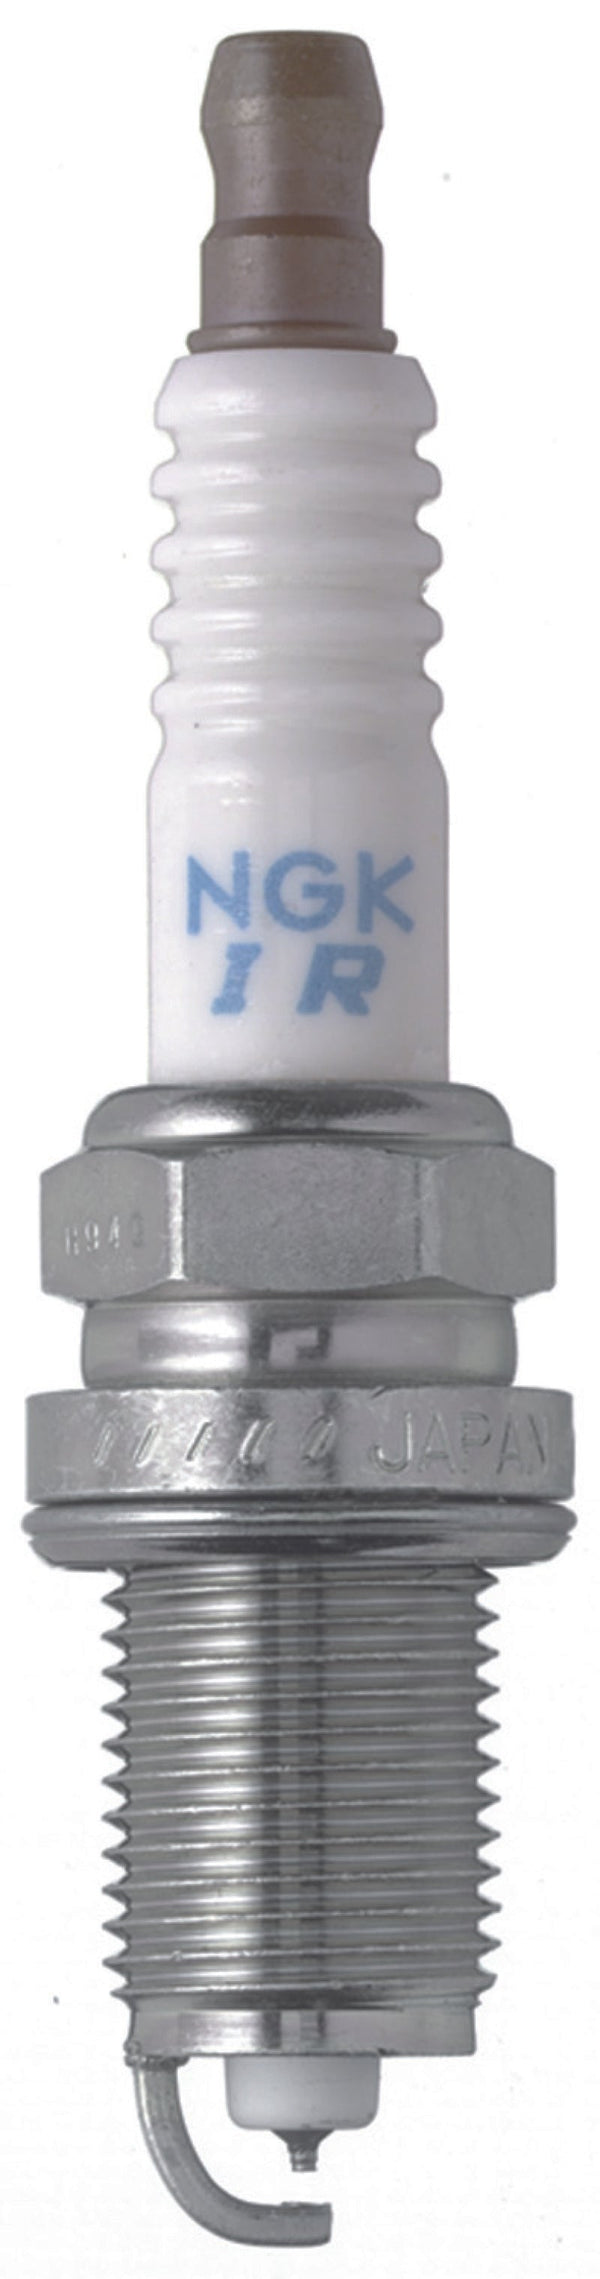 NGK Laser Iridium Spark Plug Box of 4 (IFR5J11) - Premium Spark Plugs from NGK - Just 199.44 SR! Shop now at Motors